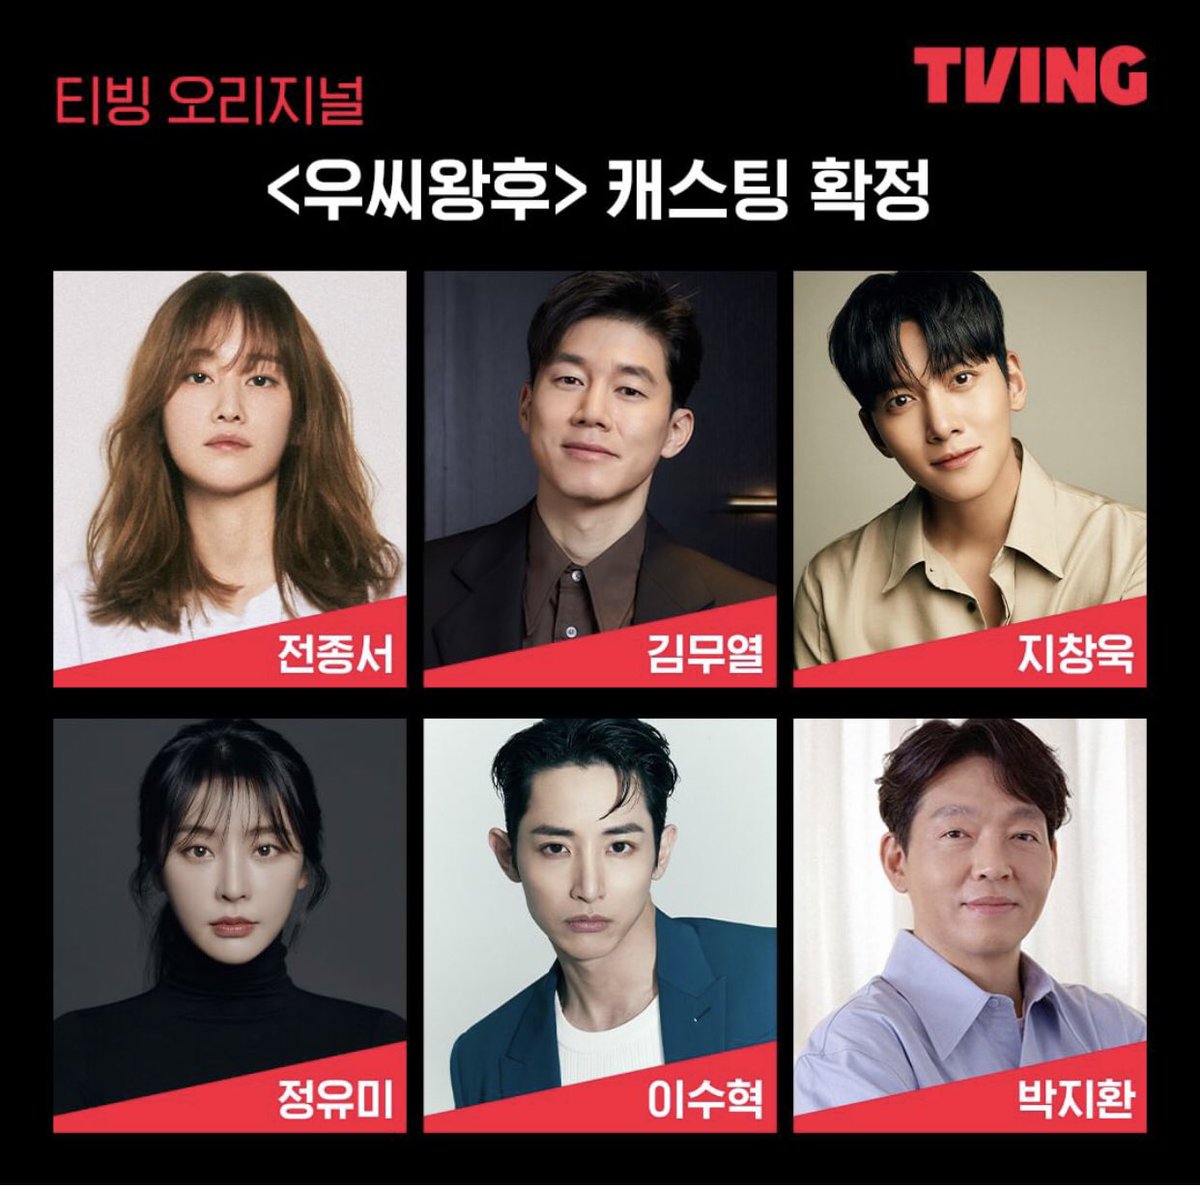 tving has confirmed the following casting line up for #QueenWoo

#JeonJongSeo
#KimMooYul
#JiChangWook
#JungYuMi
#LeeSooHyuk
#ParkJiHwan